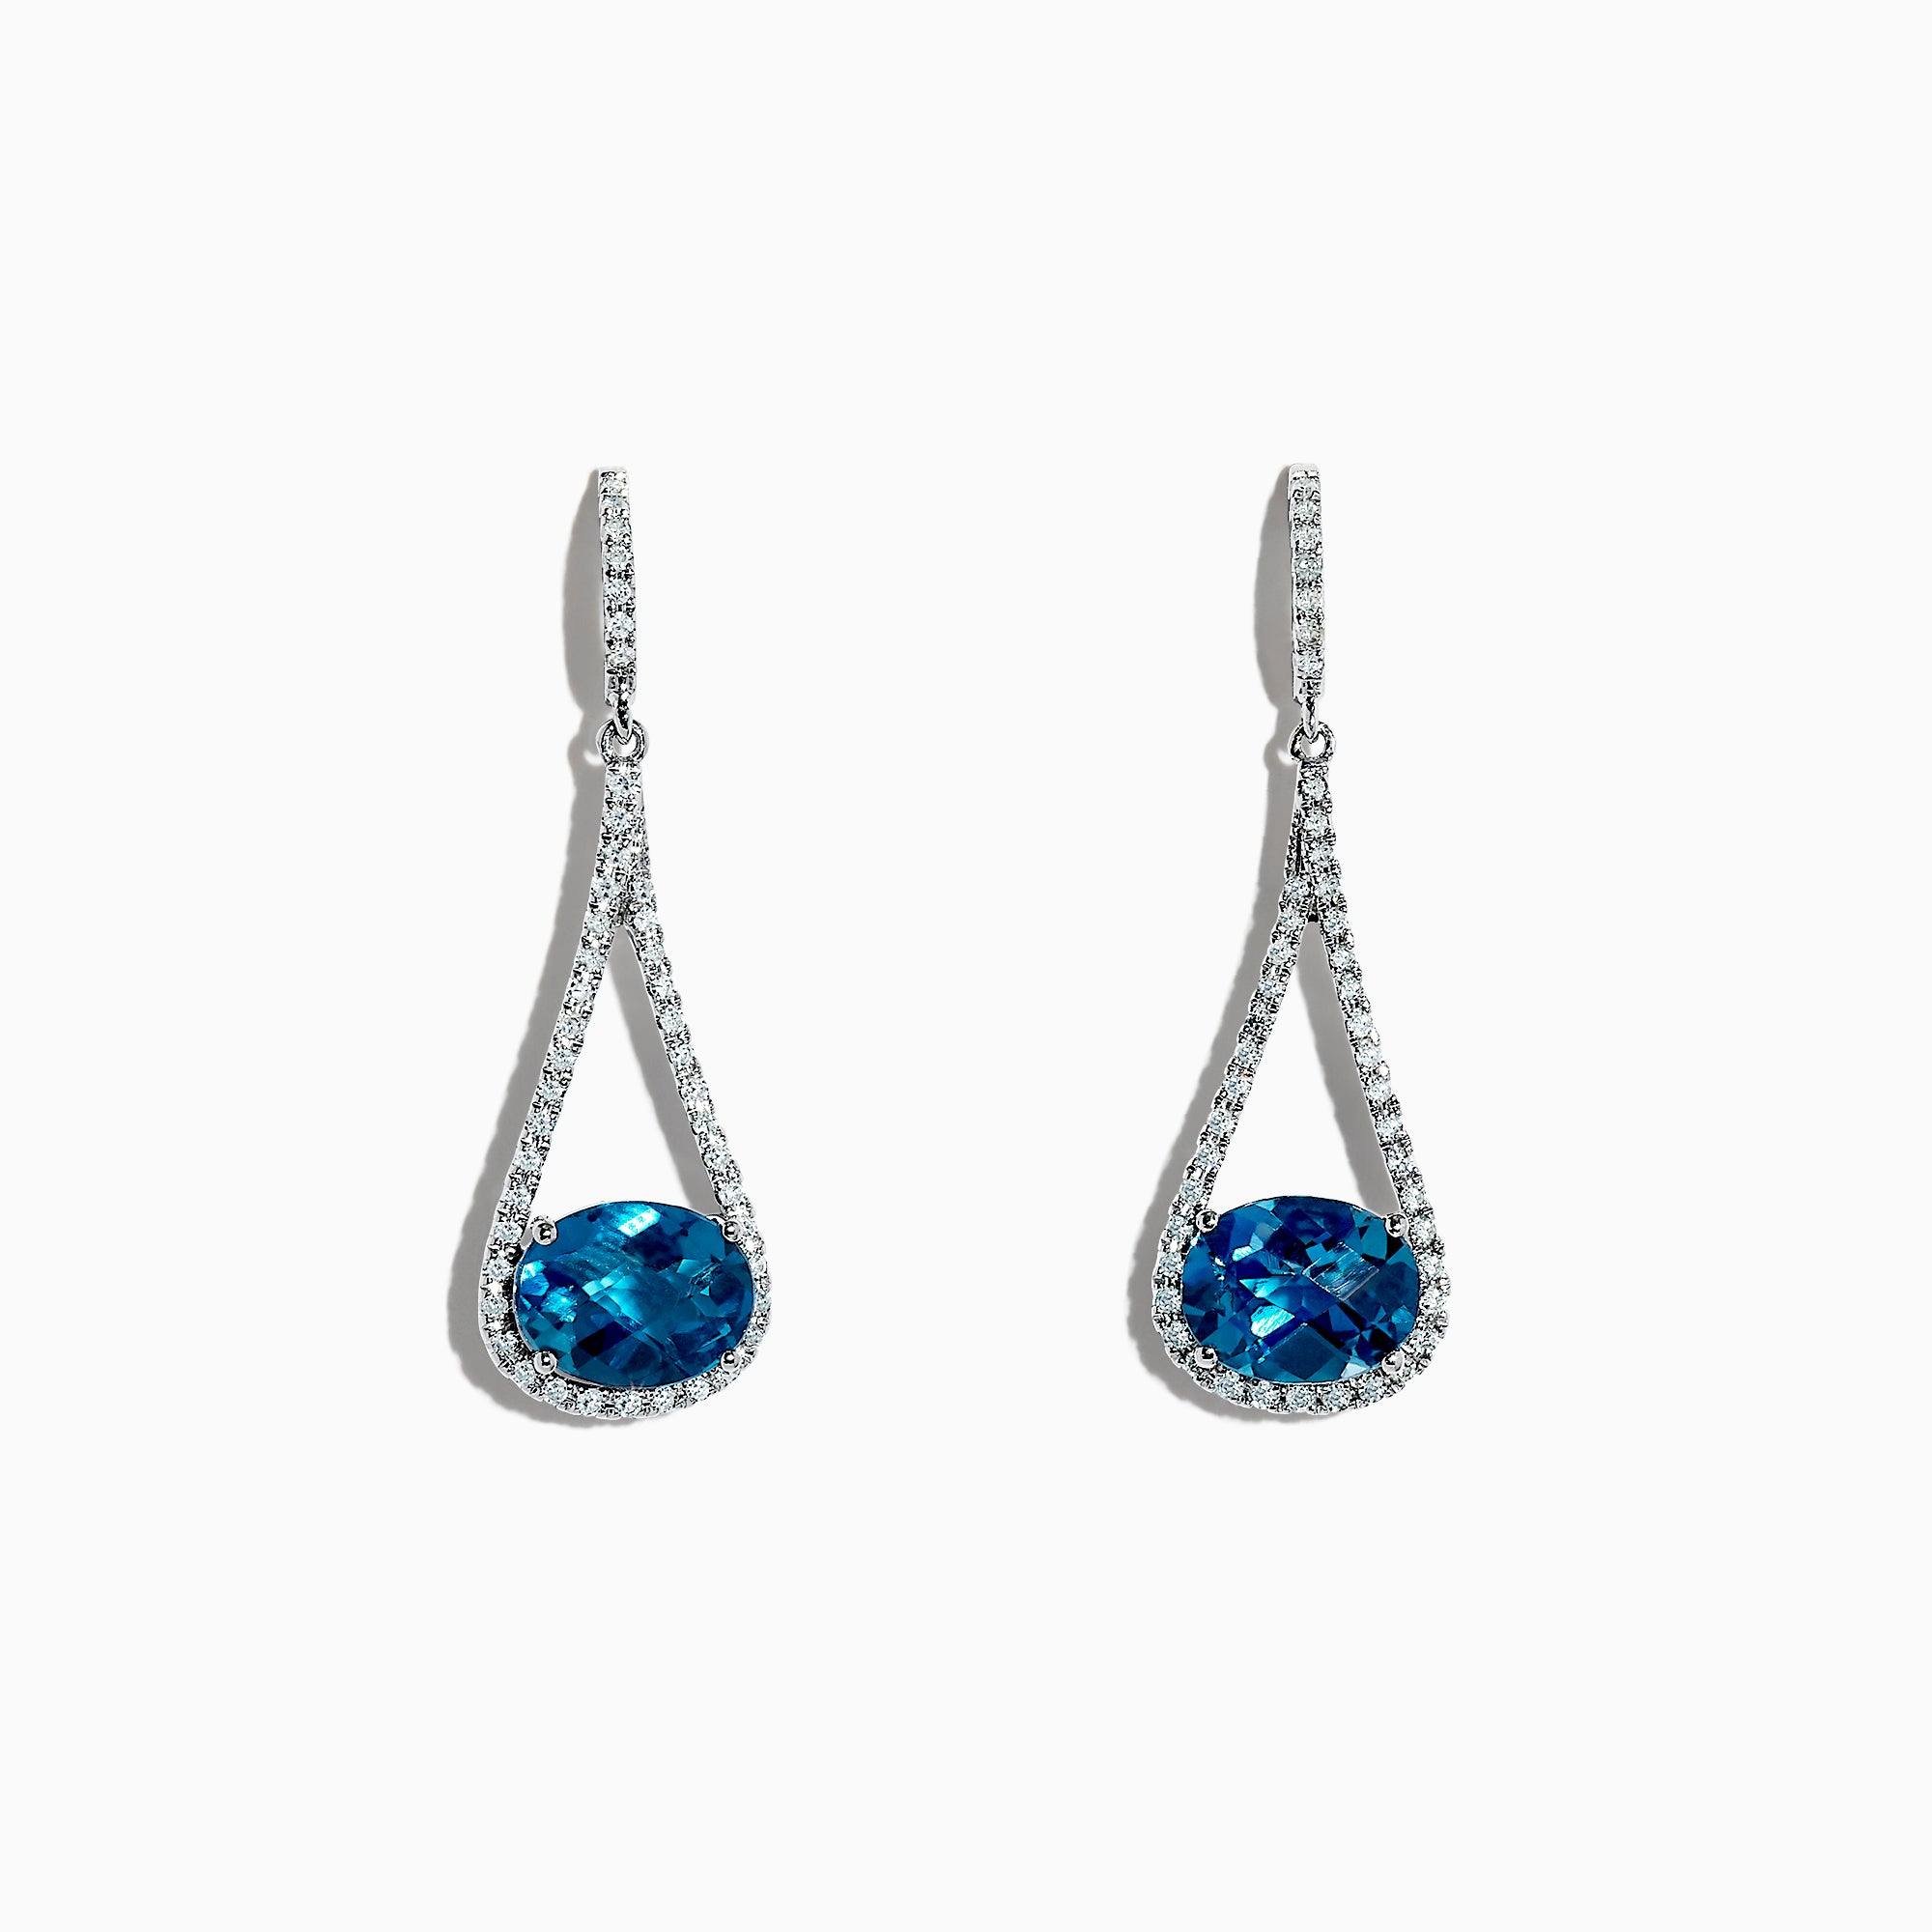 Top more than 169 zales blue diamond earrings super hot